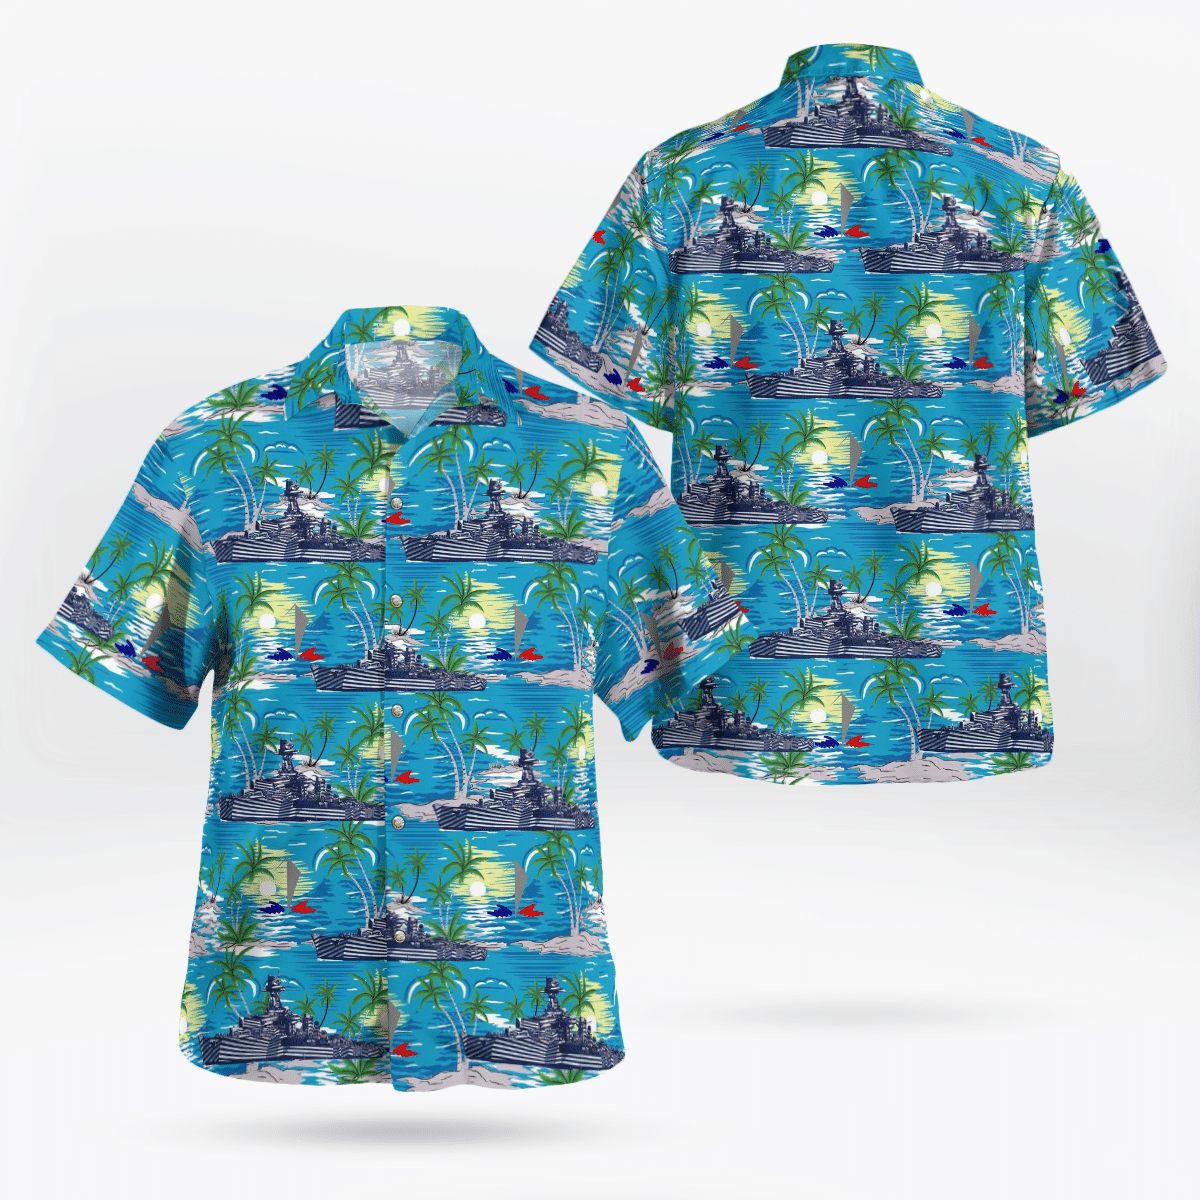 Why don't you order Hot Hawaiian Shirt today? 317